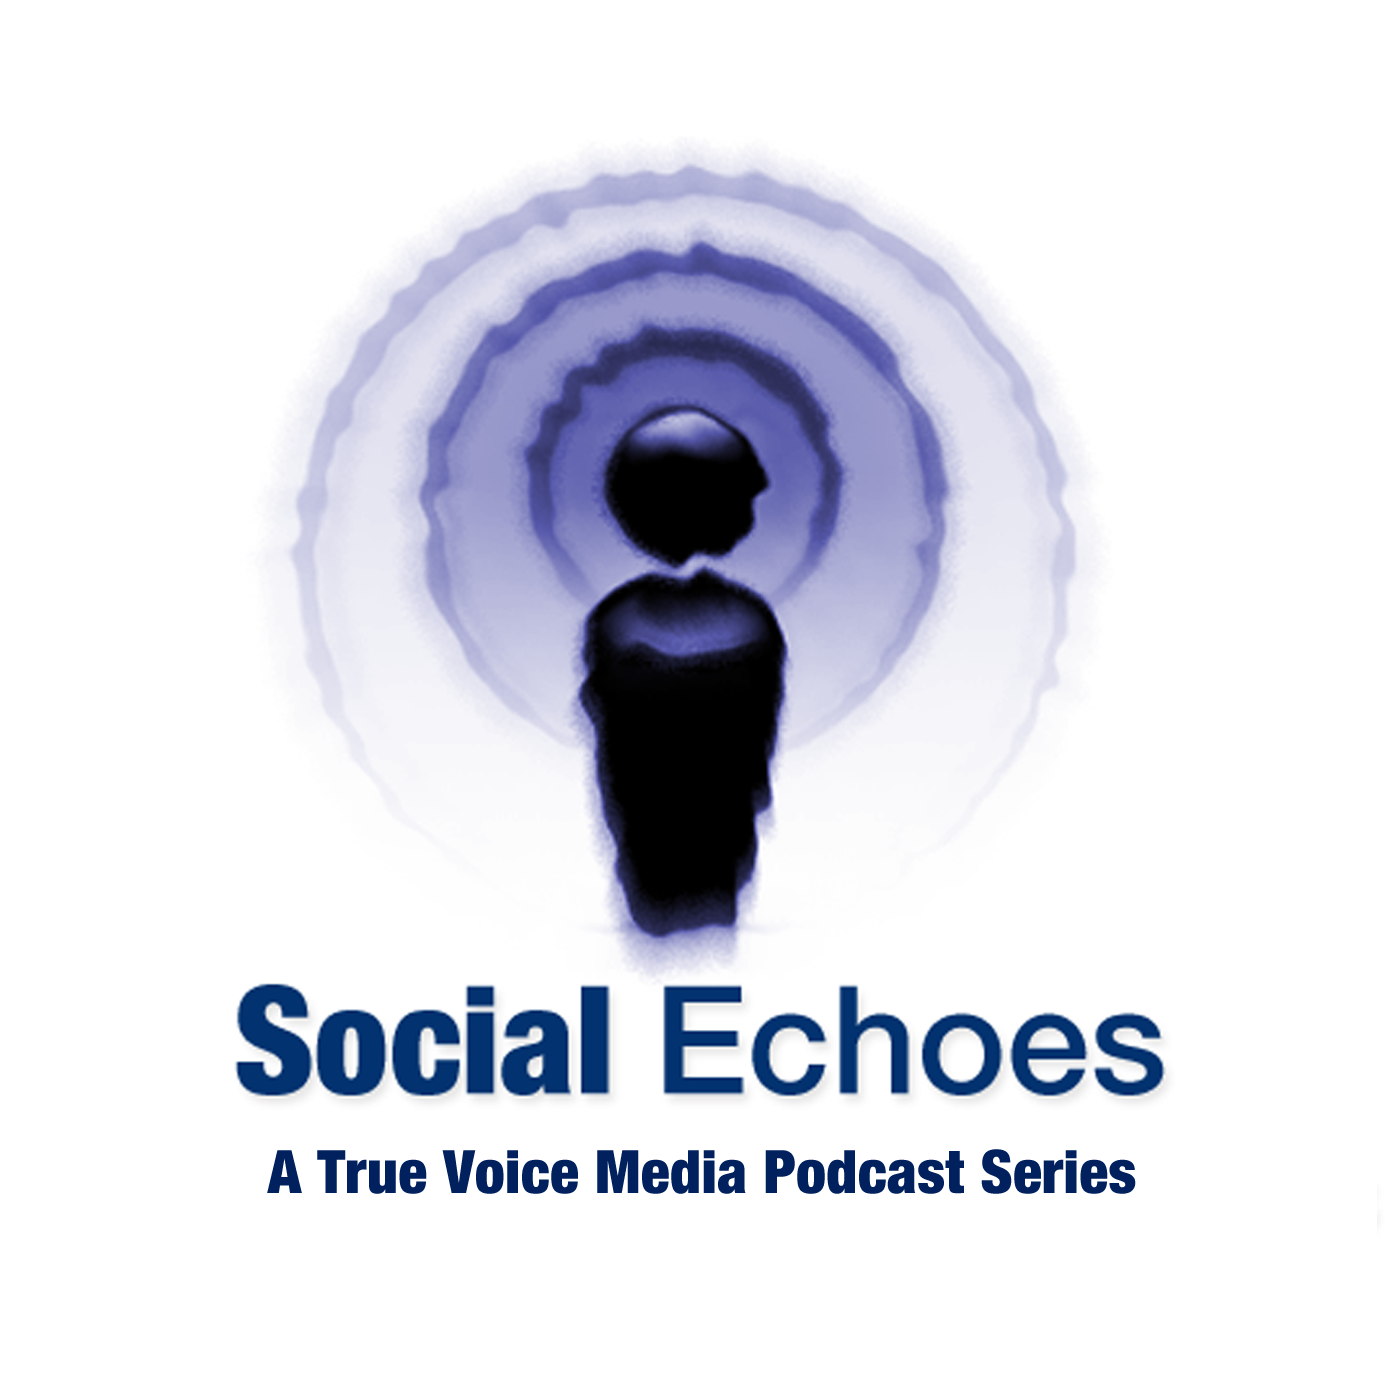 Chris Brogan - Social Echoes Podcast | Episode 24